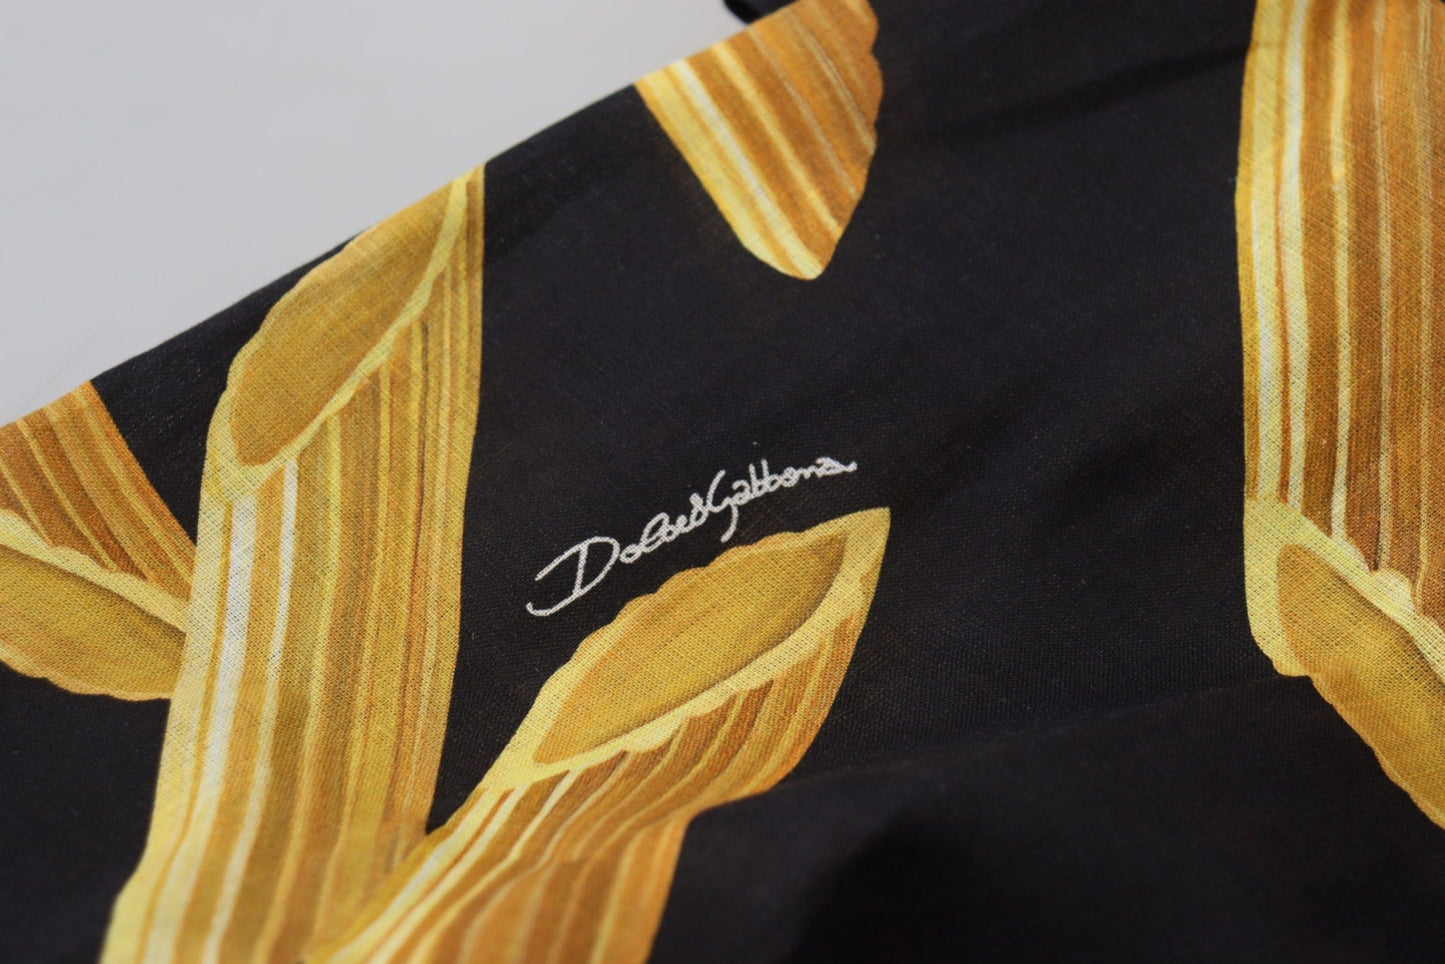 Dolce & Gabbana Black Casual Penne Rigate Linen Casual Shirt